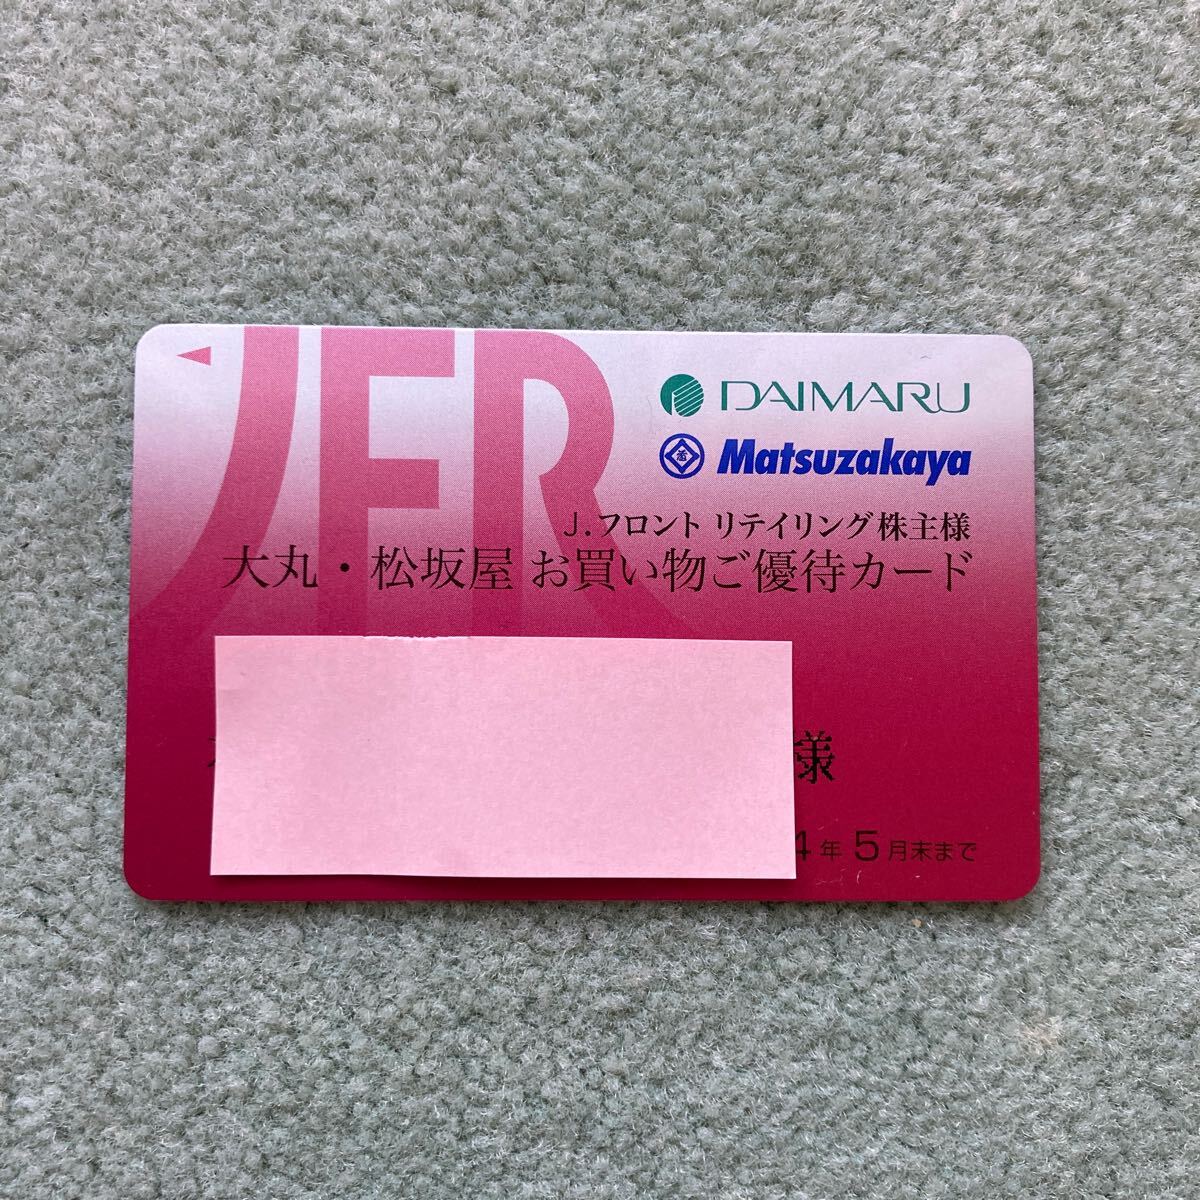 J.フロント リテイリング 株主優待カード 限度額1497084円【送料込】（即決有】の画像1